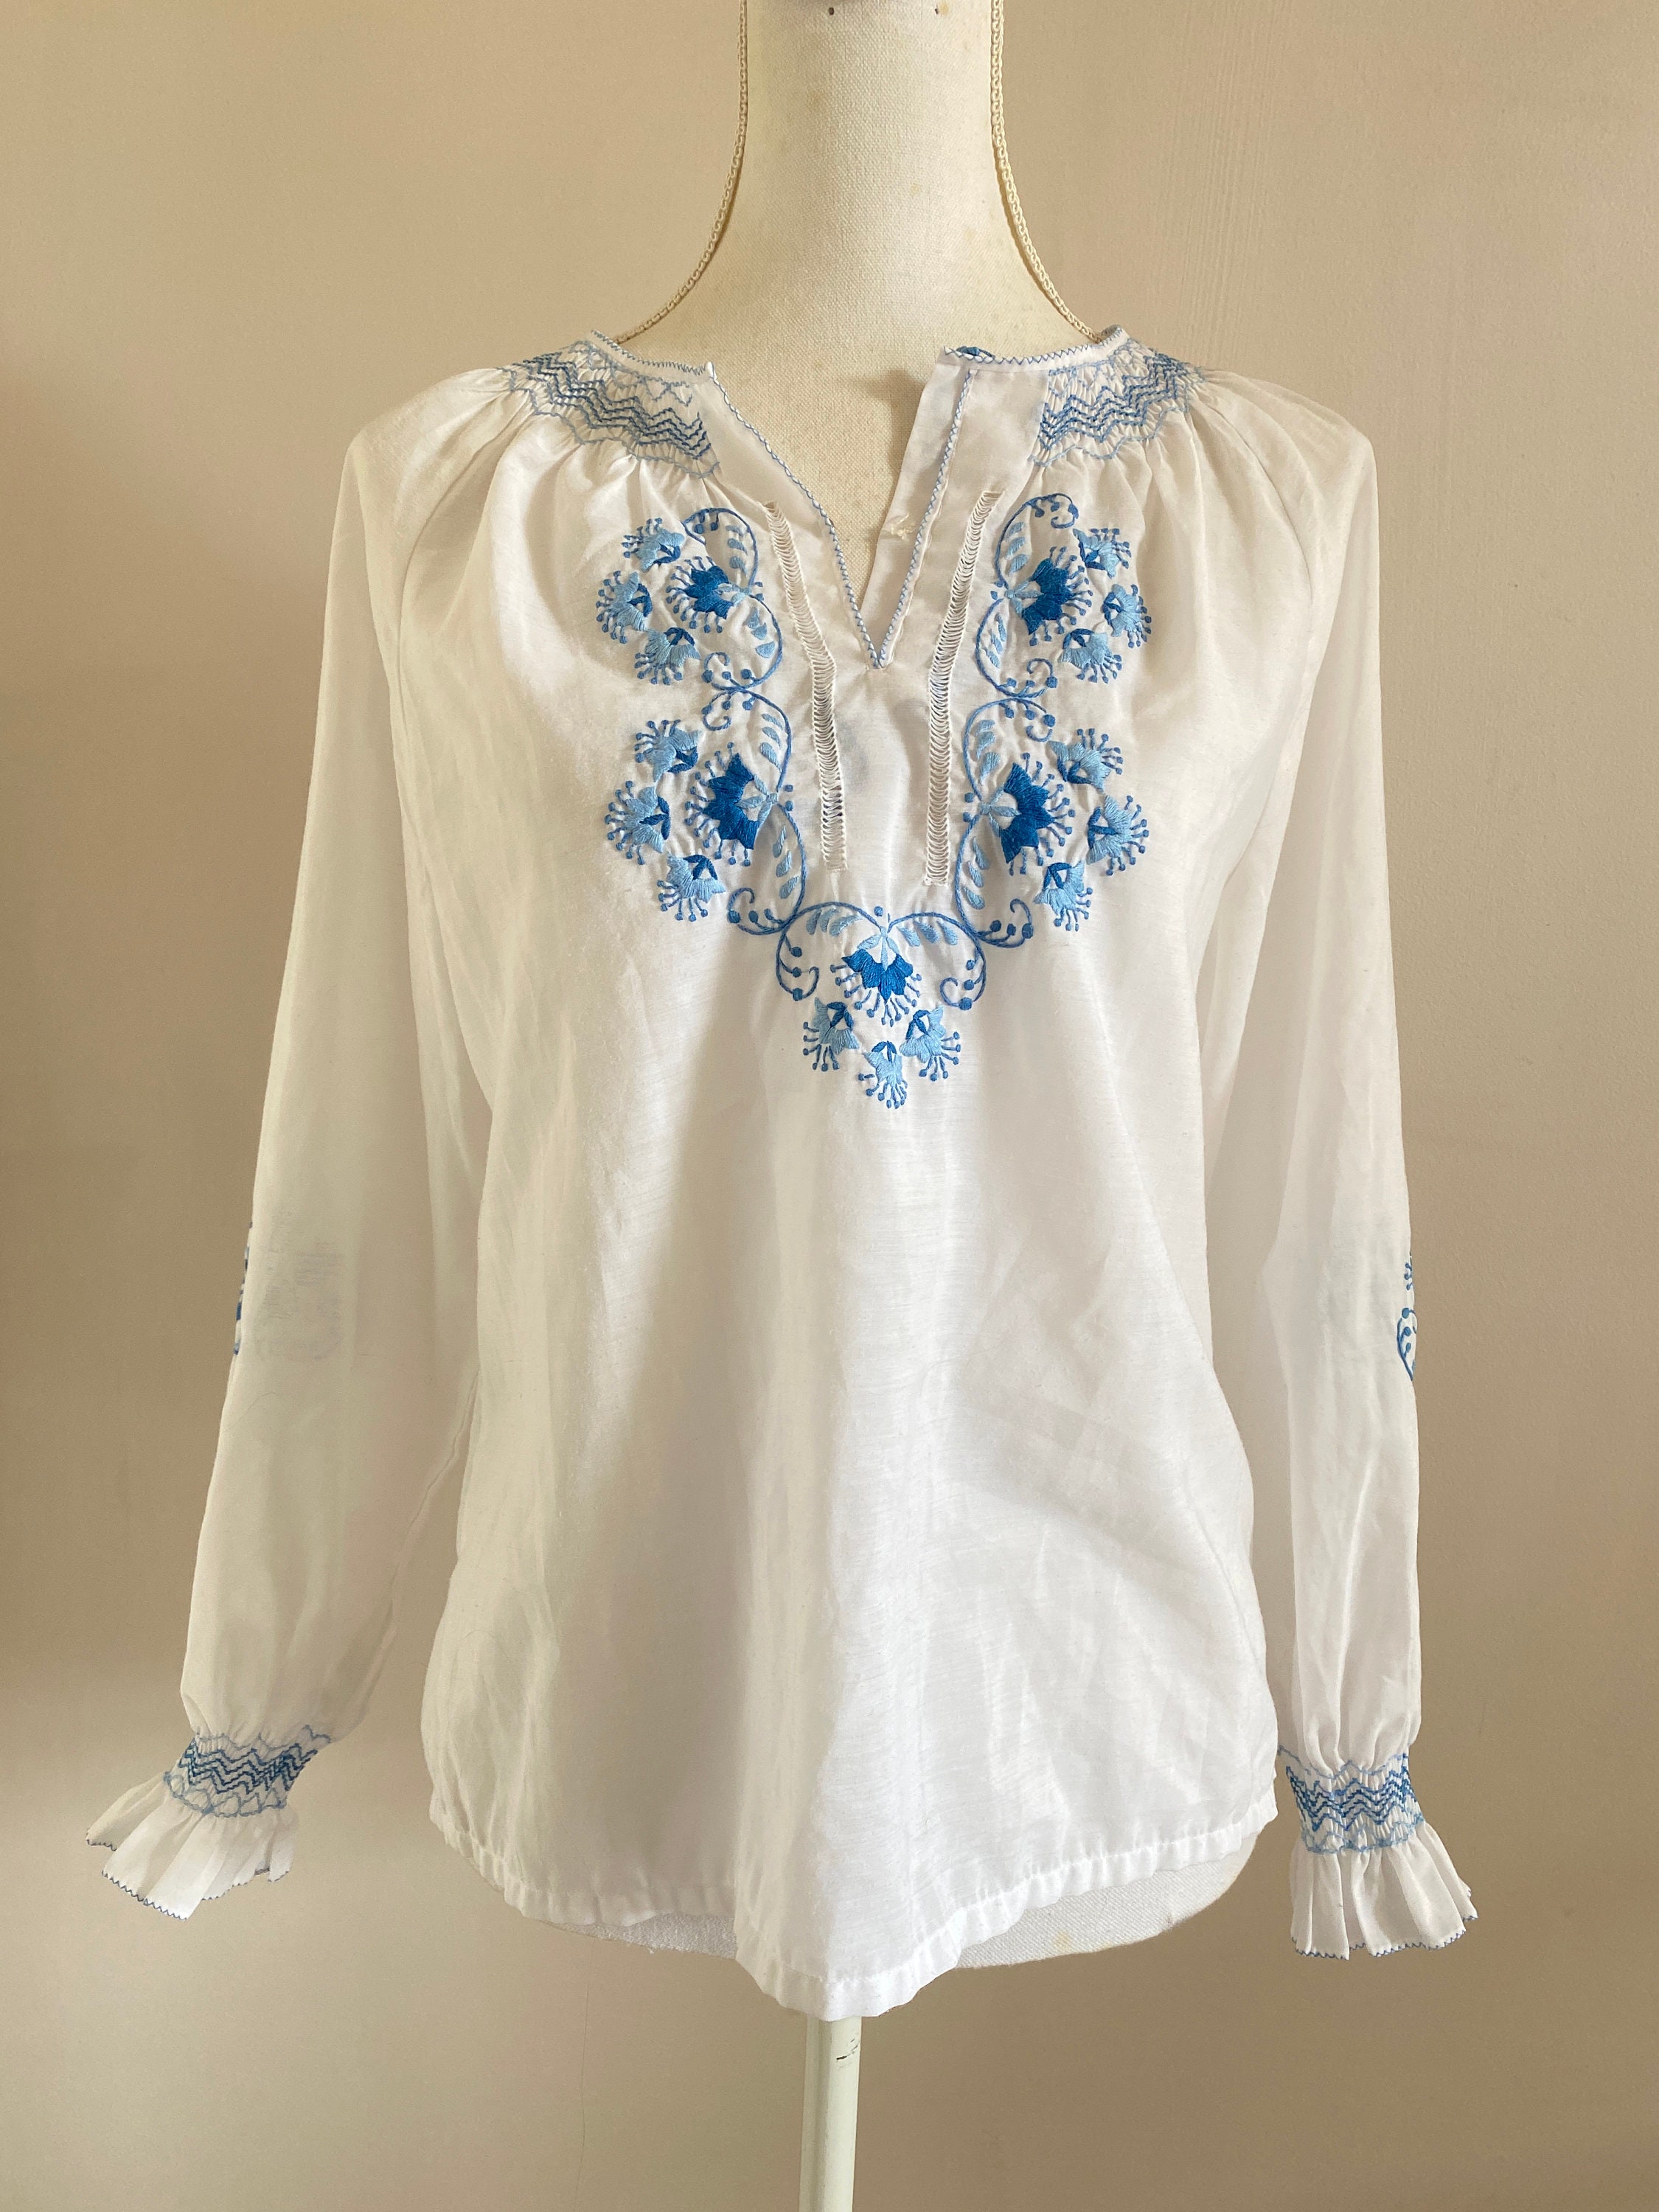 Vintage folklore embroidered blouse vintage hungarian blouse | Etsy